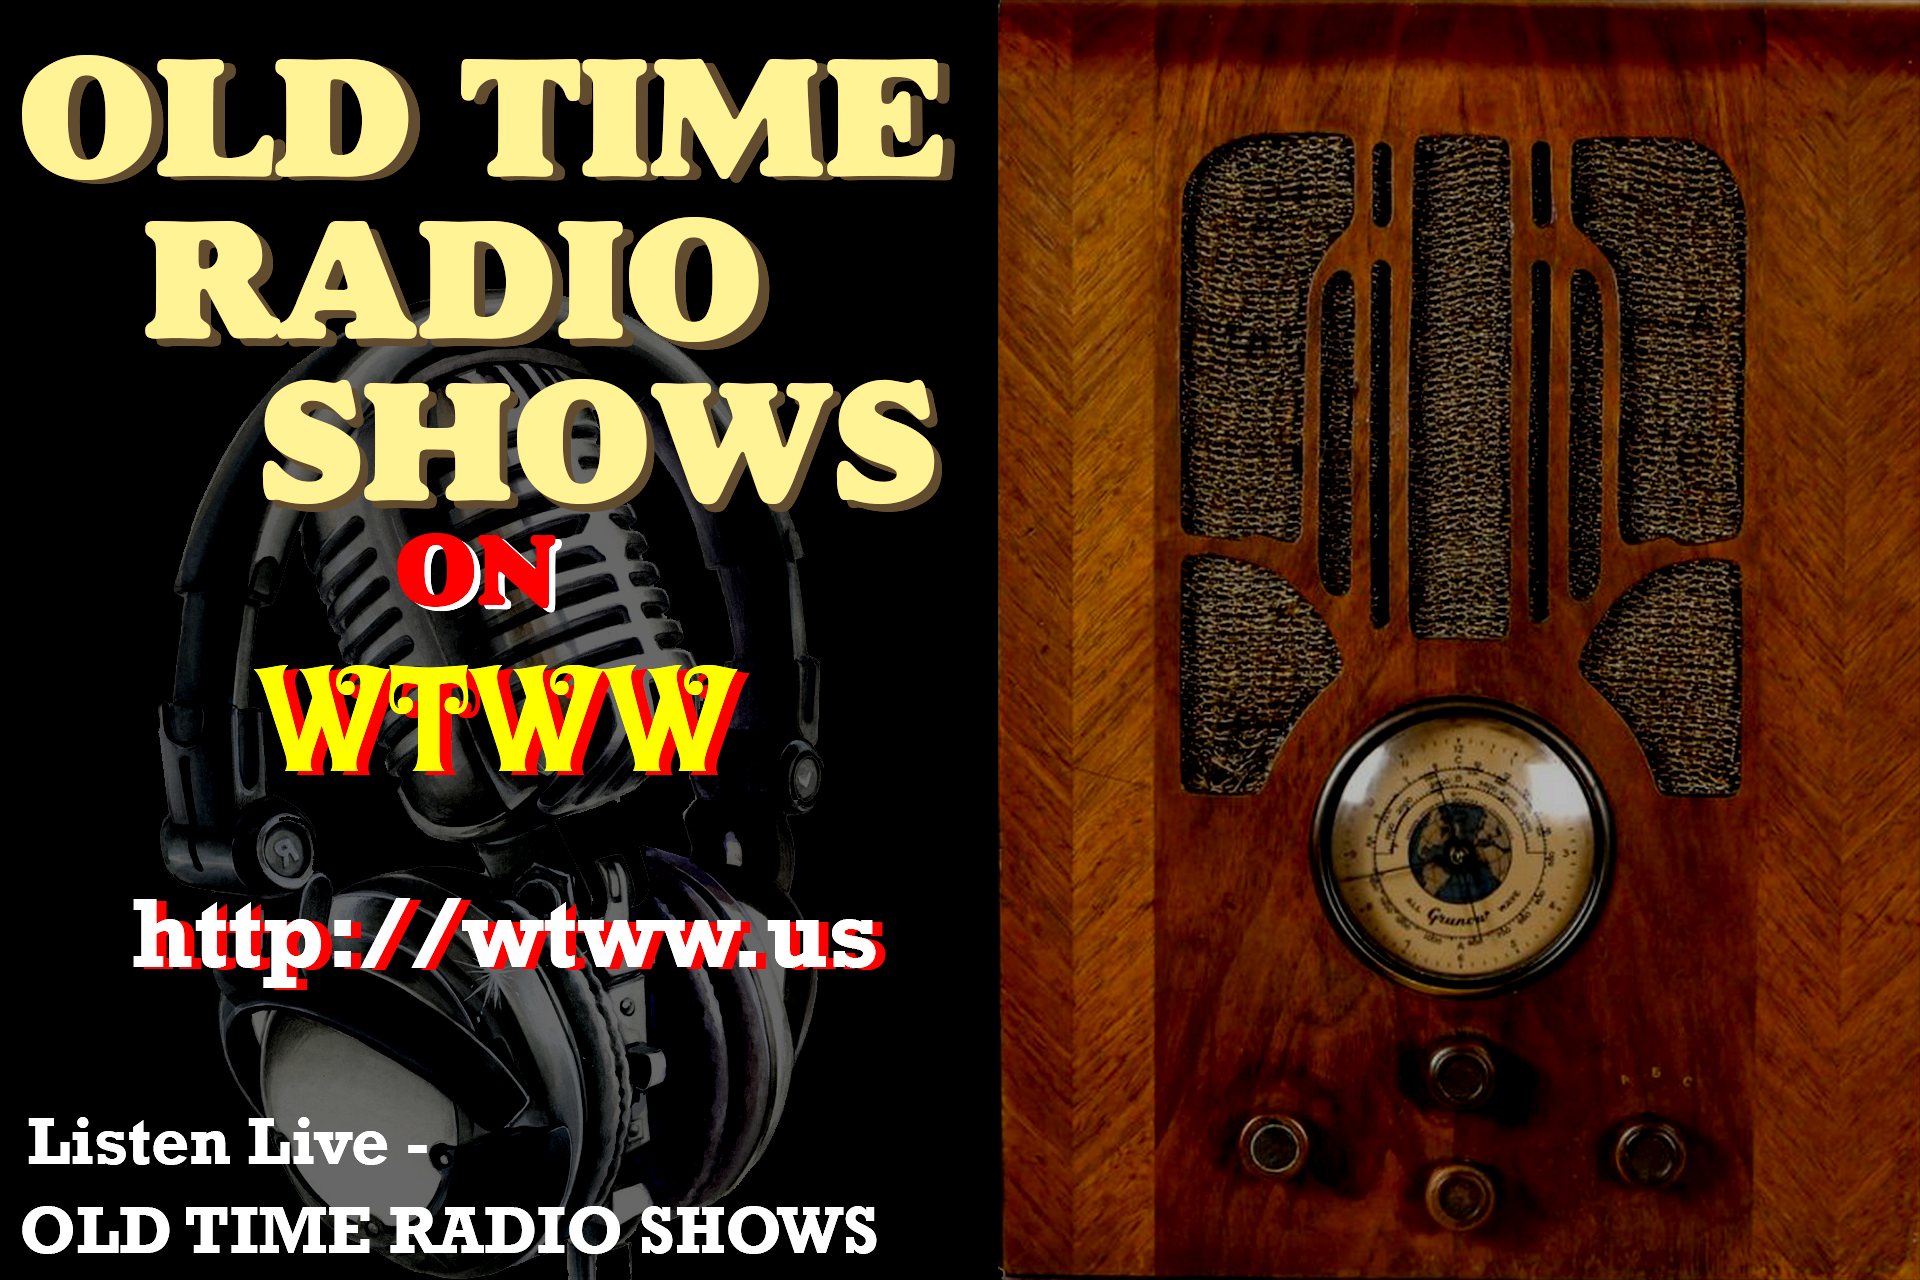 WTWW - OLD TIME RADIO